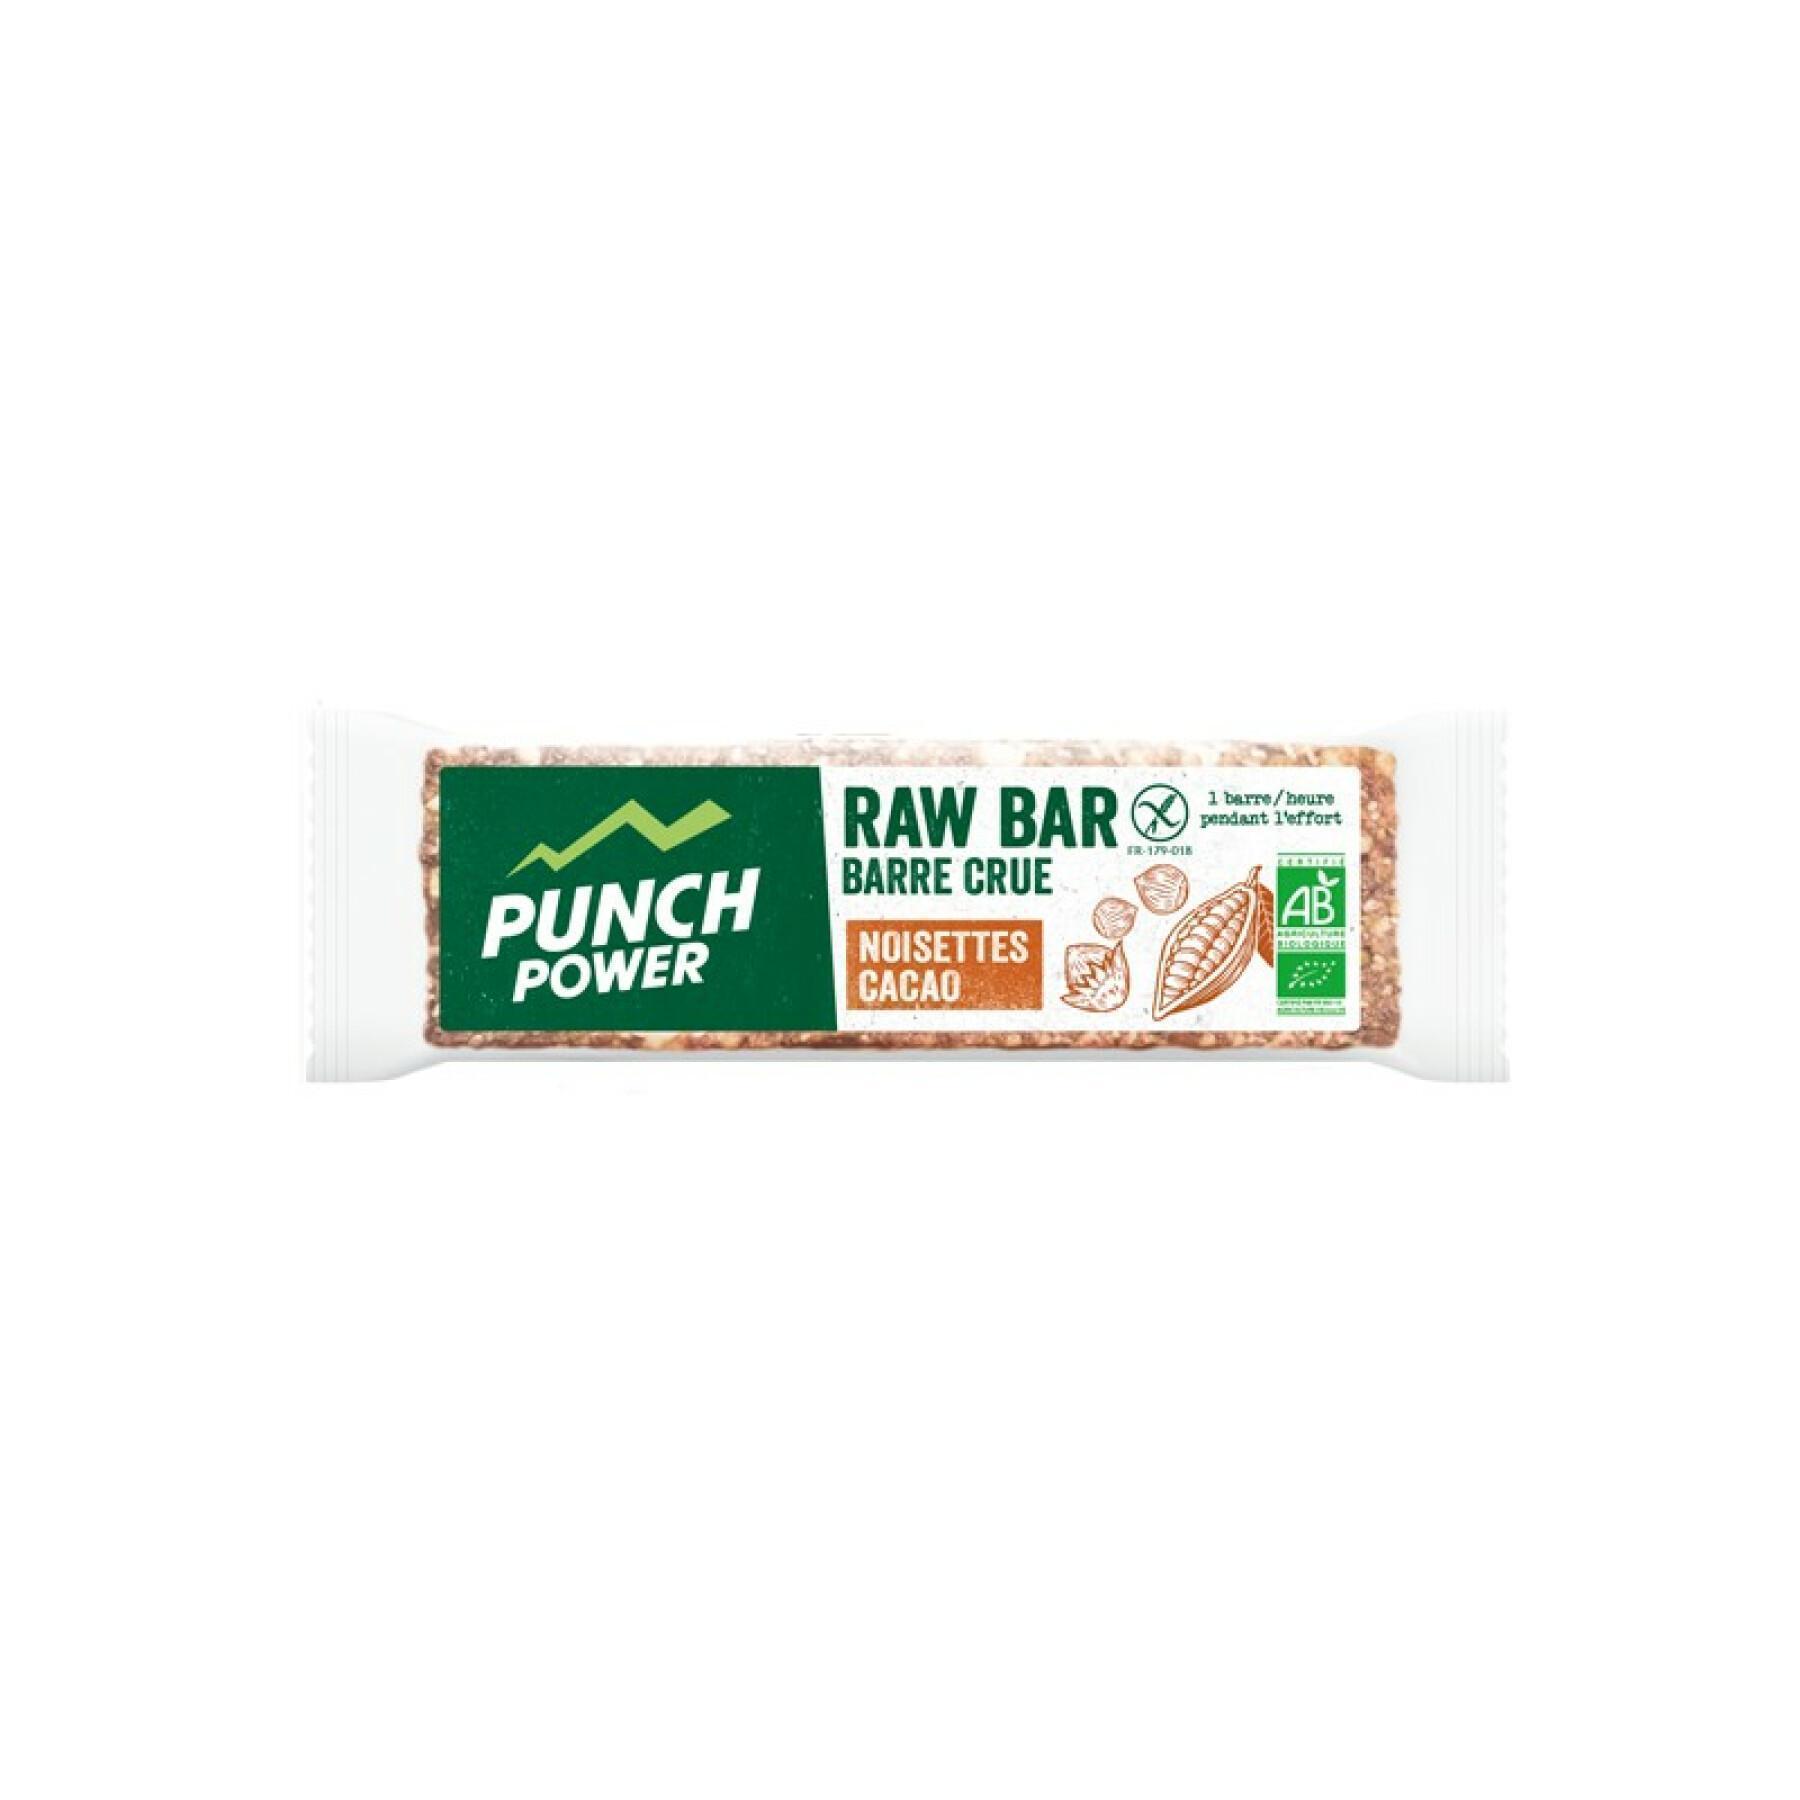 Mostrar 20 barras de energia Punch Power Rawbar Noisettes cacao